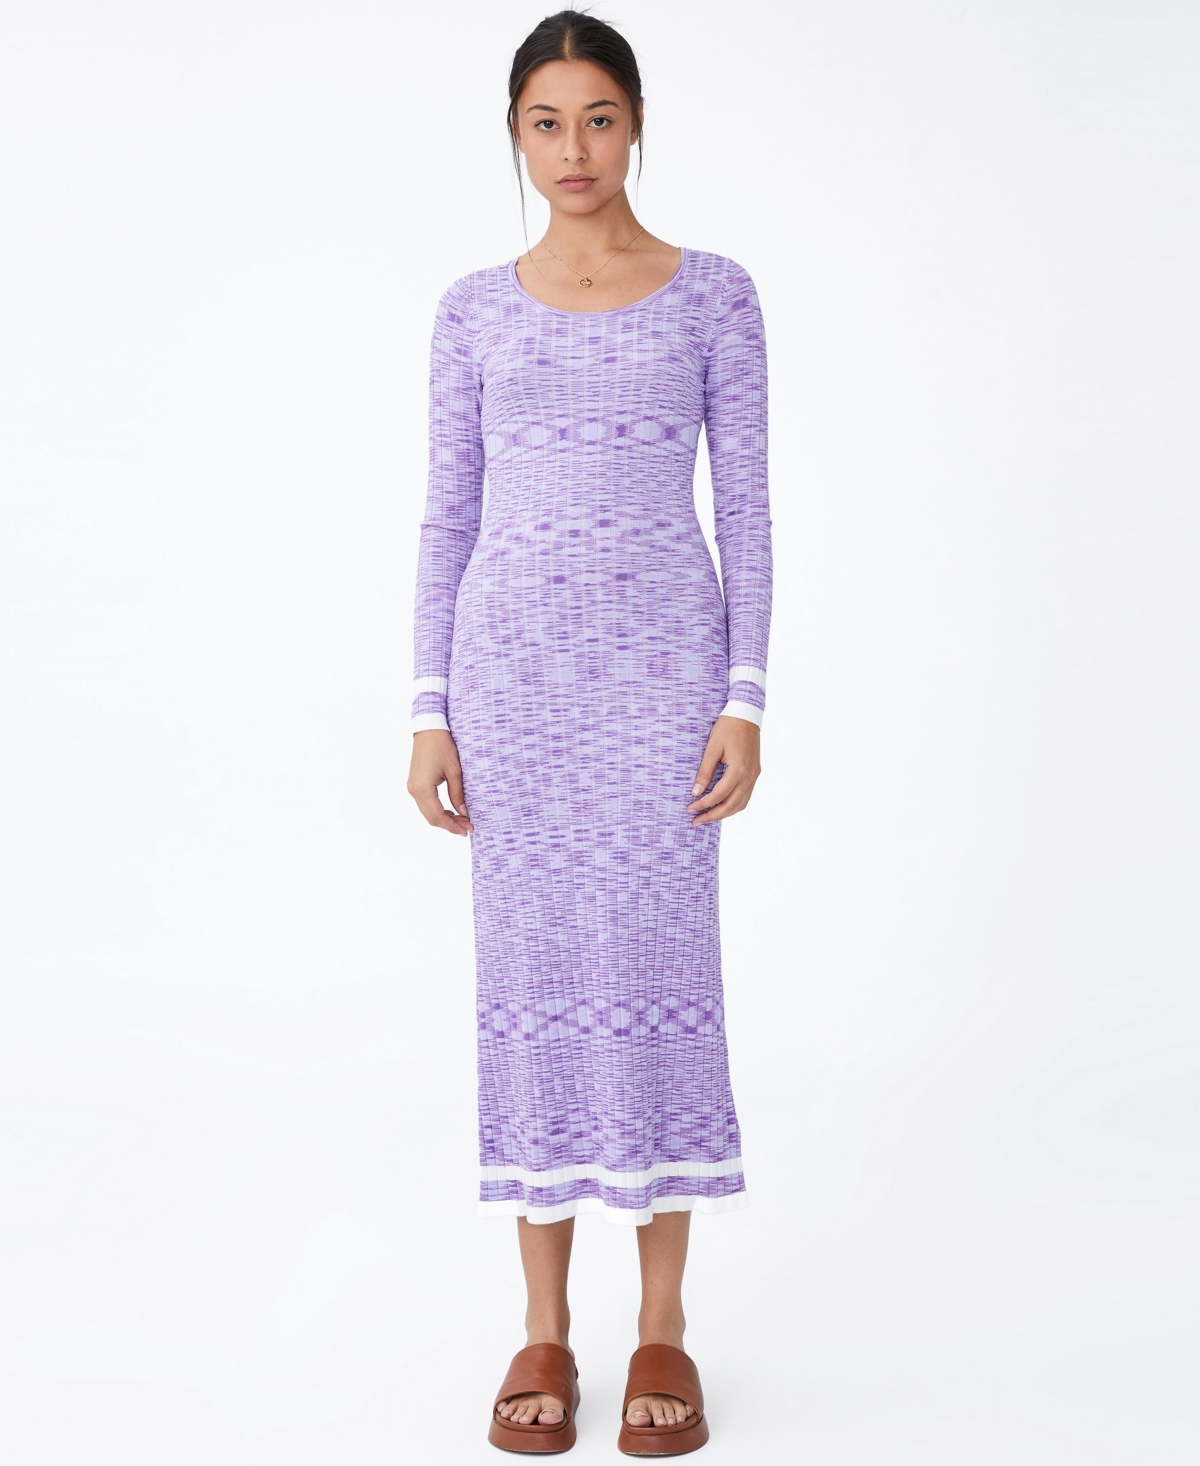 Cotton On Women's Space Dye Knit Midaxi Dress In Lavender Space Dye